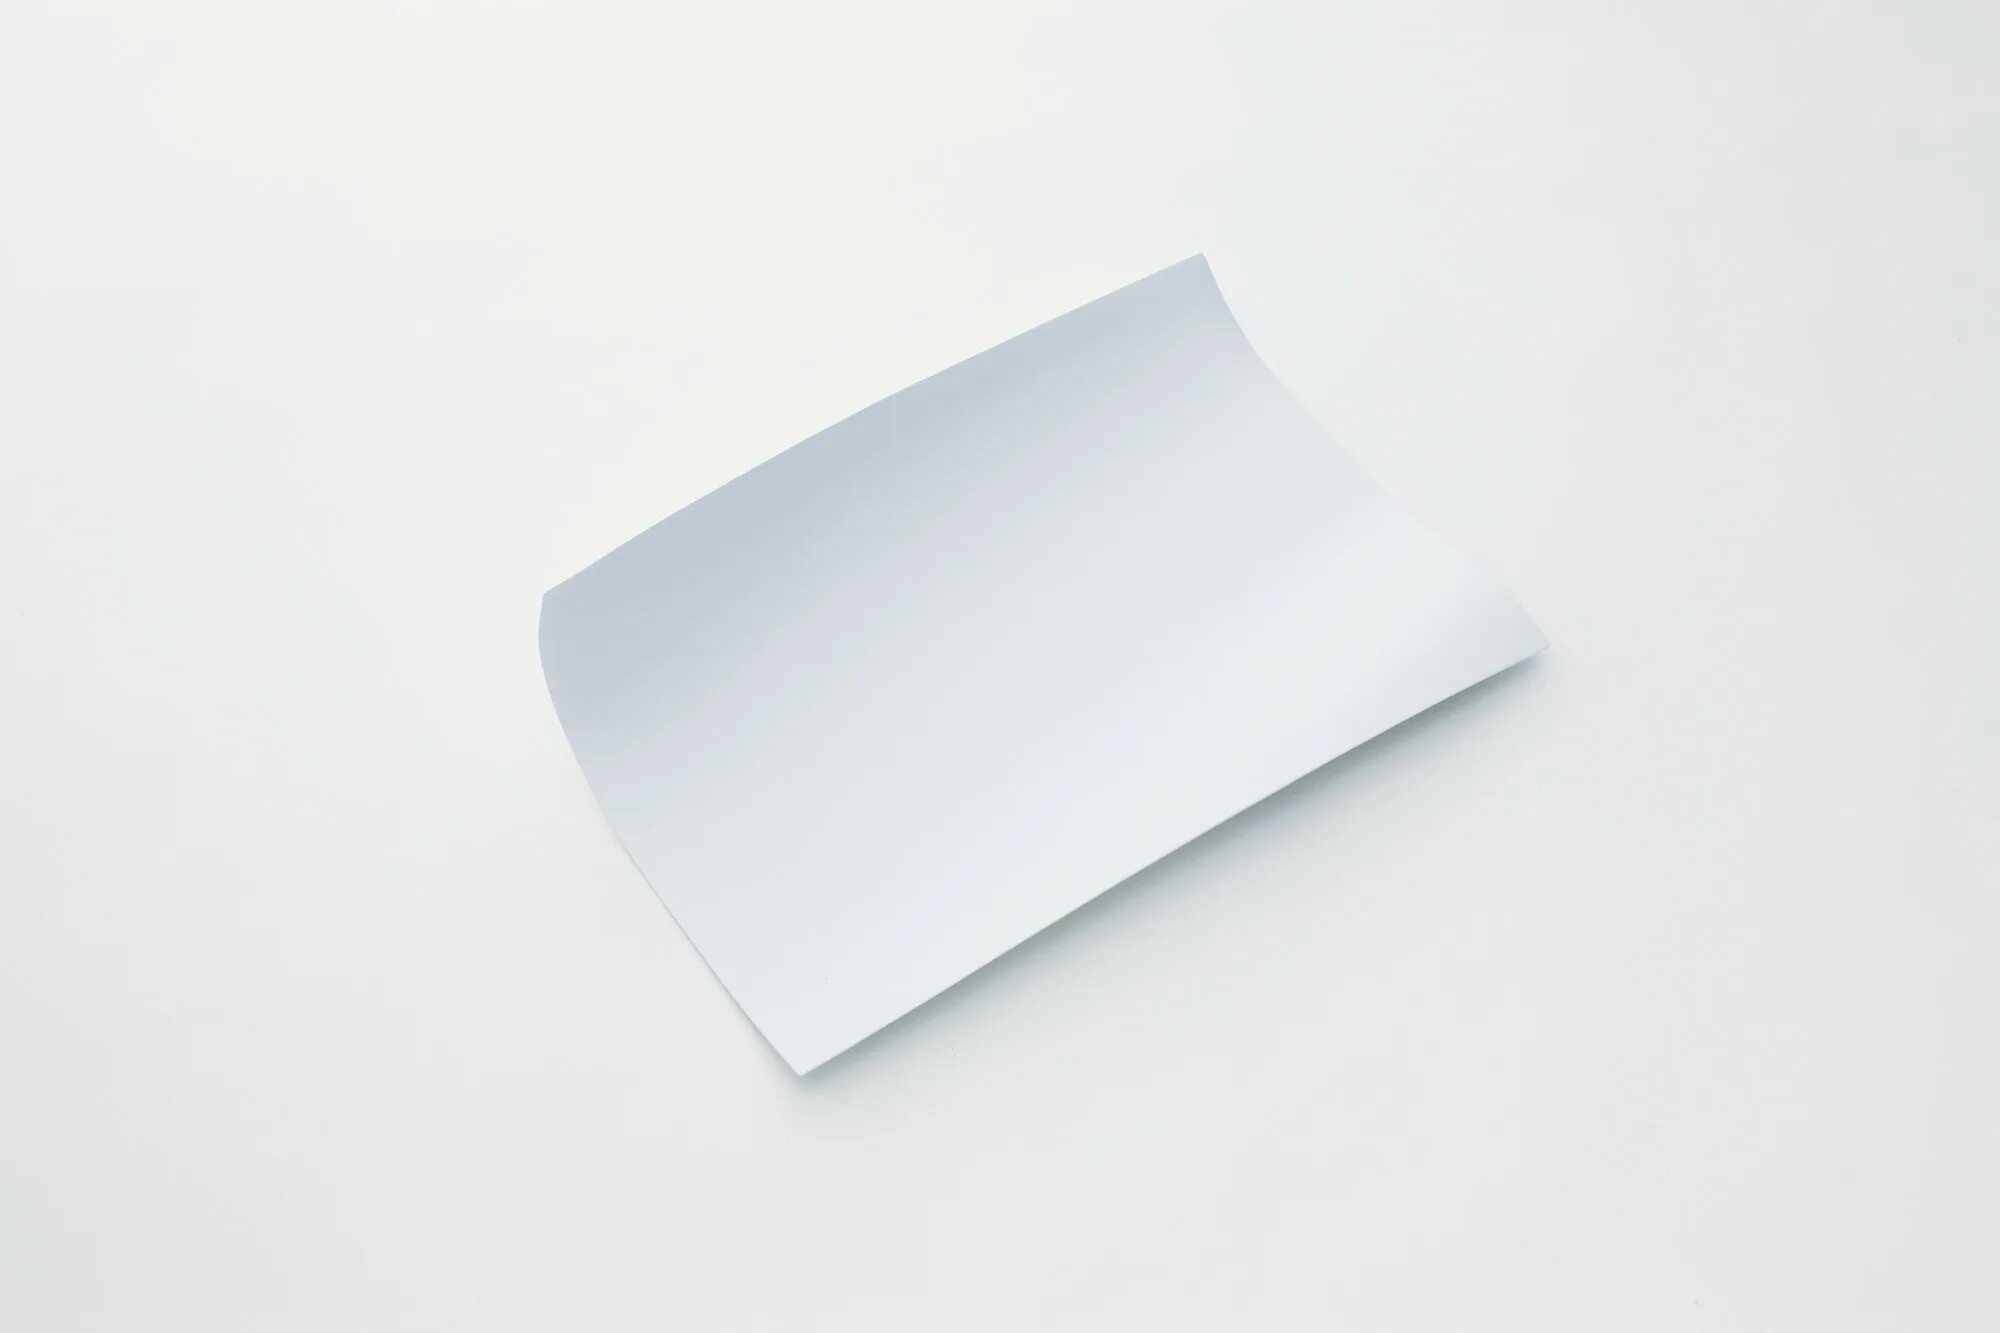 Лист бумаги. Белый лист бумаги. Бумажный лист. Лист бумаги на белом фоне. Sheet of paper